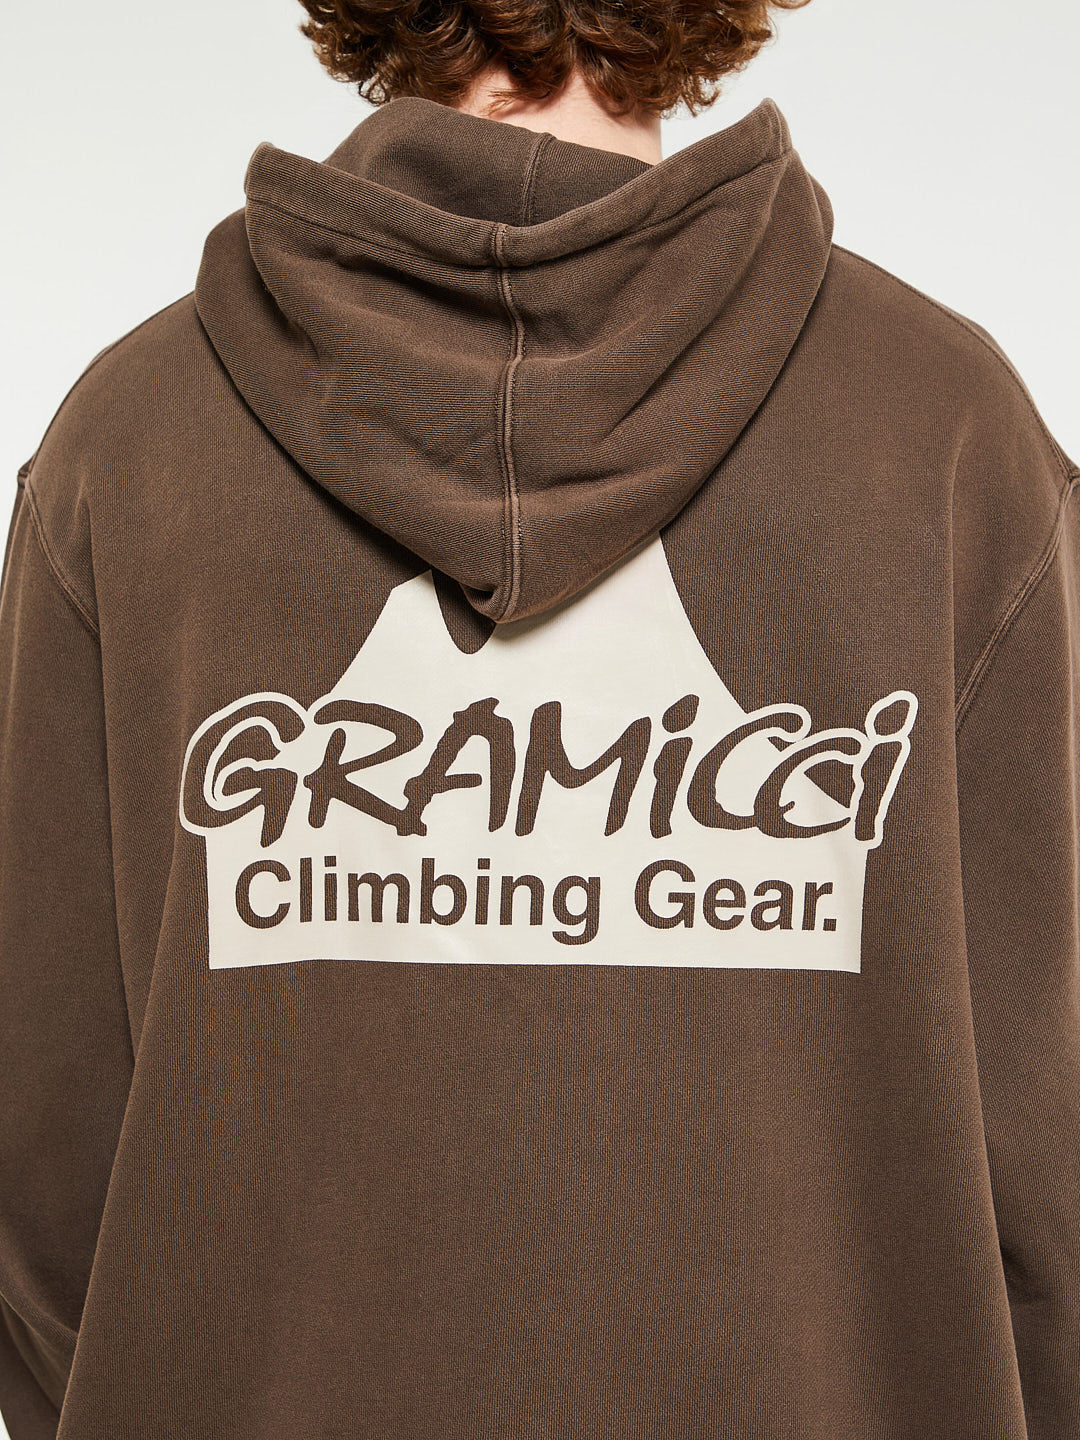 Climbing Gear Hooded Sweatshirt in Brown